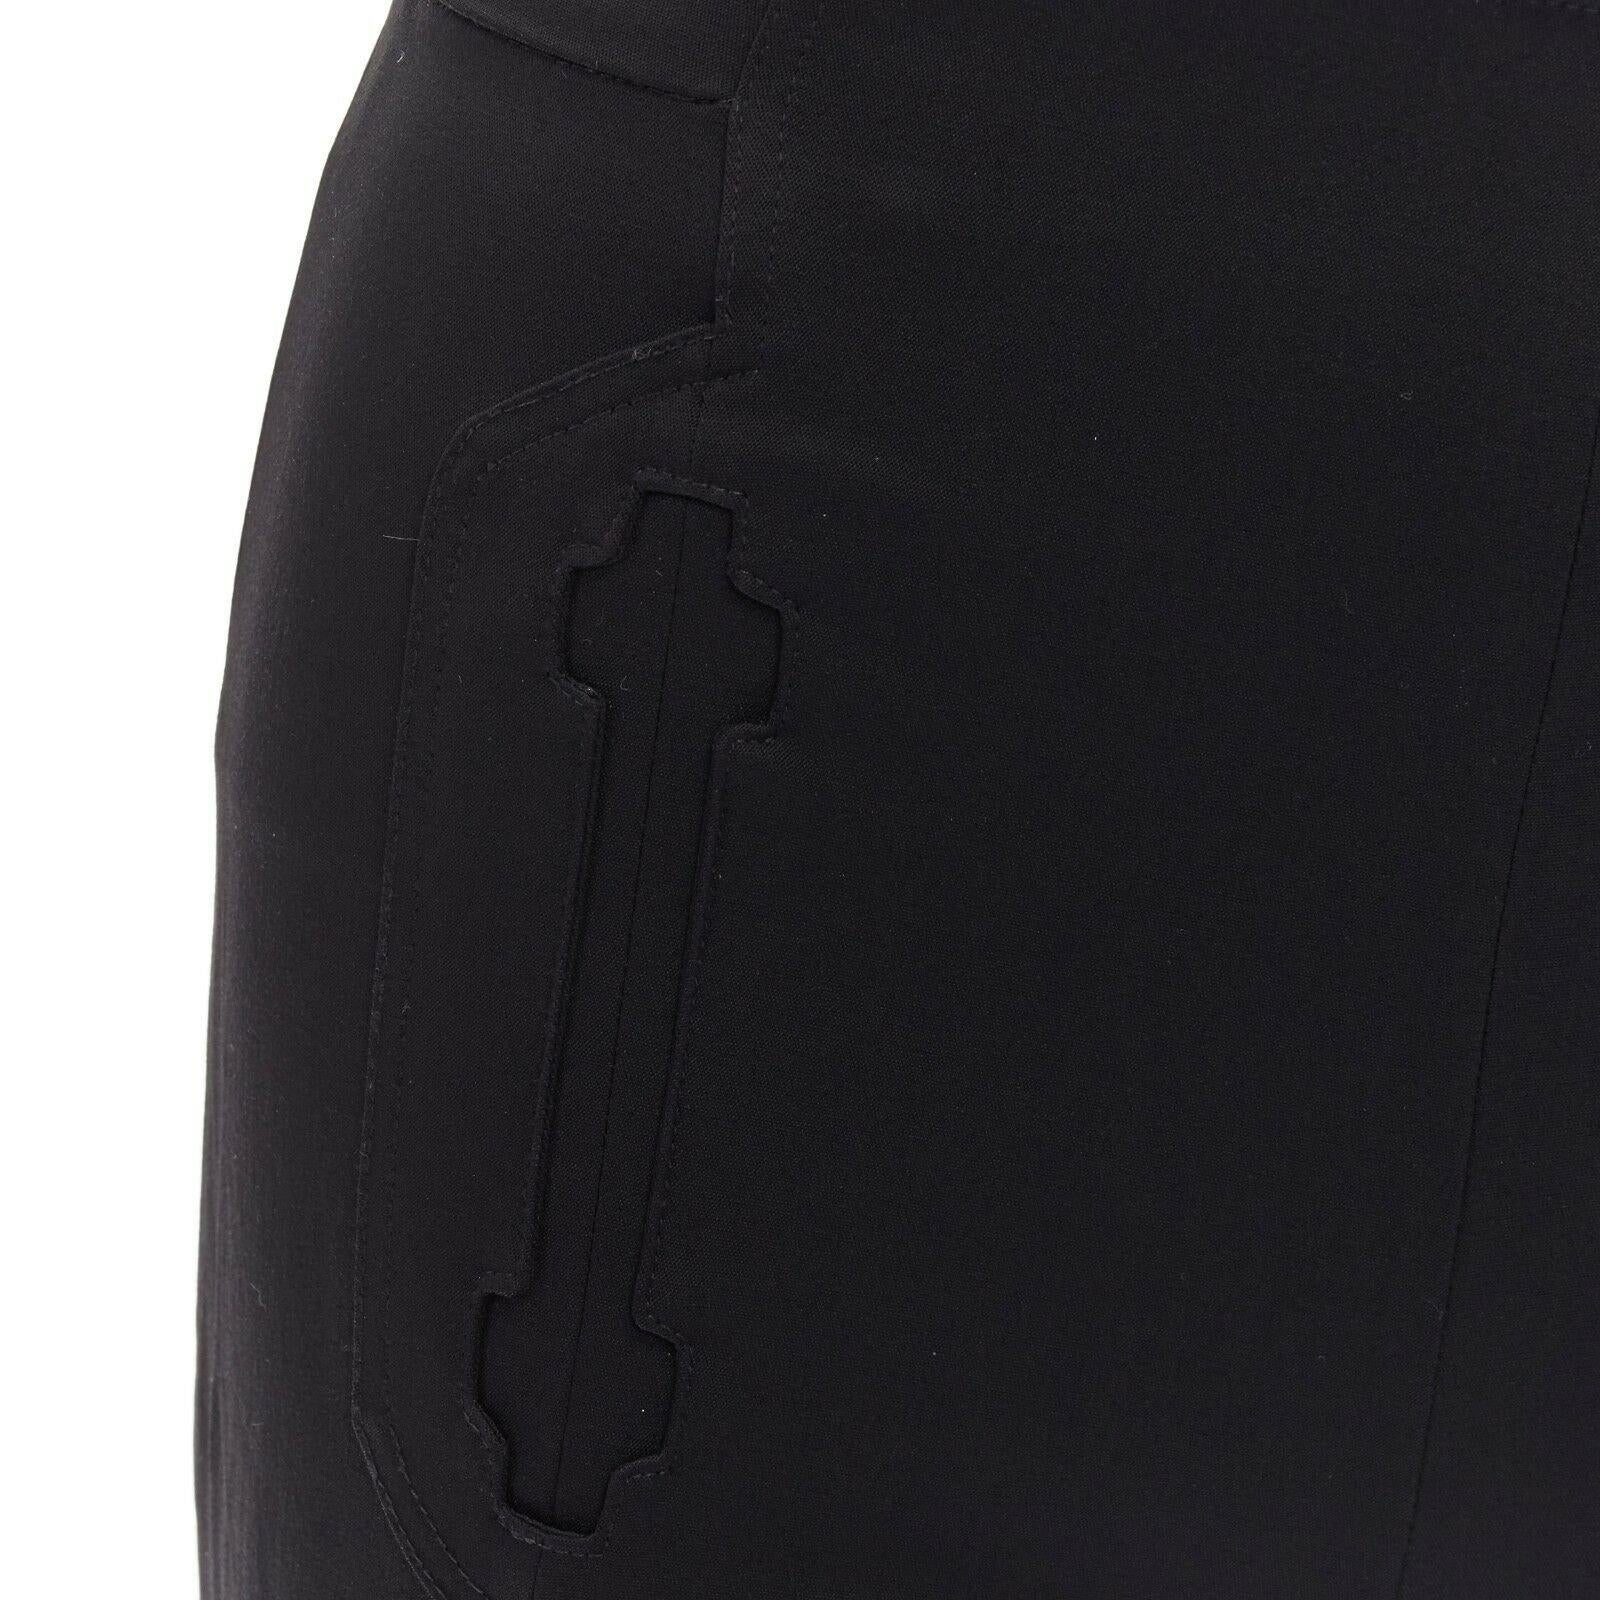 ZAC POSEN black wool blend patterned faux pockets zip back straight leg pants S 1